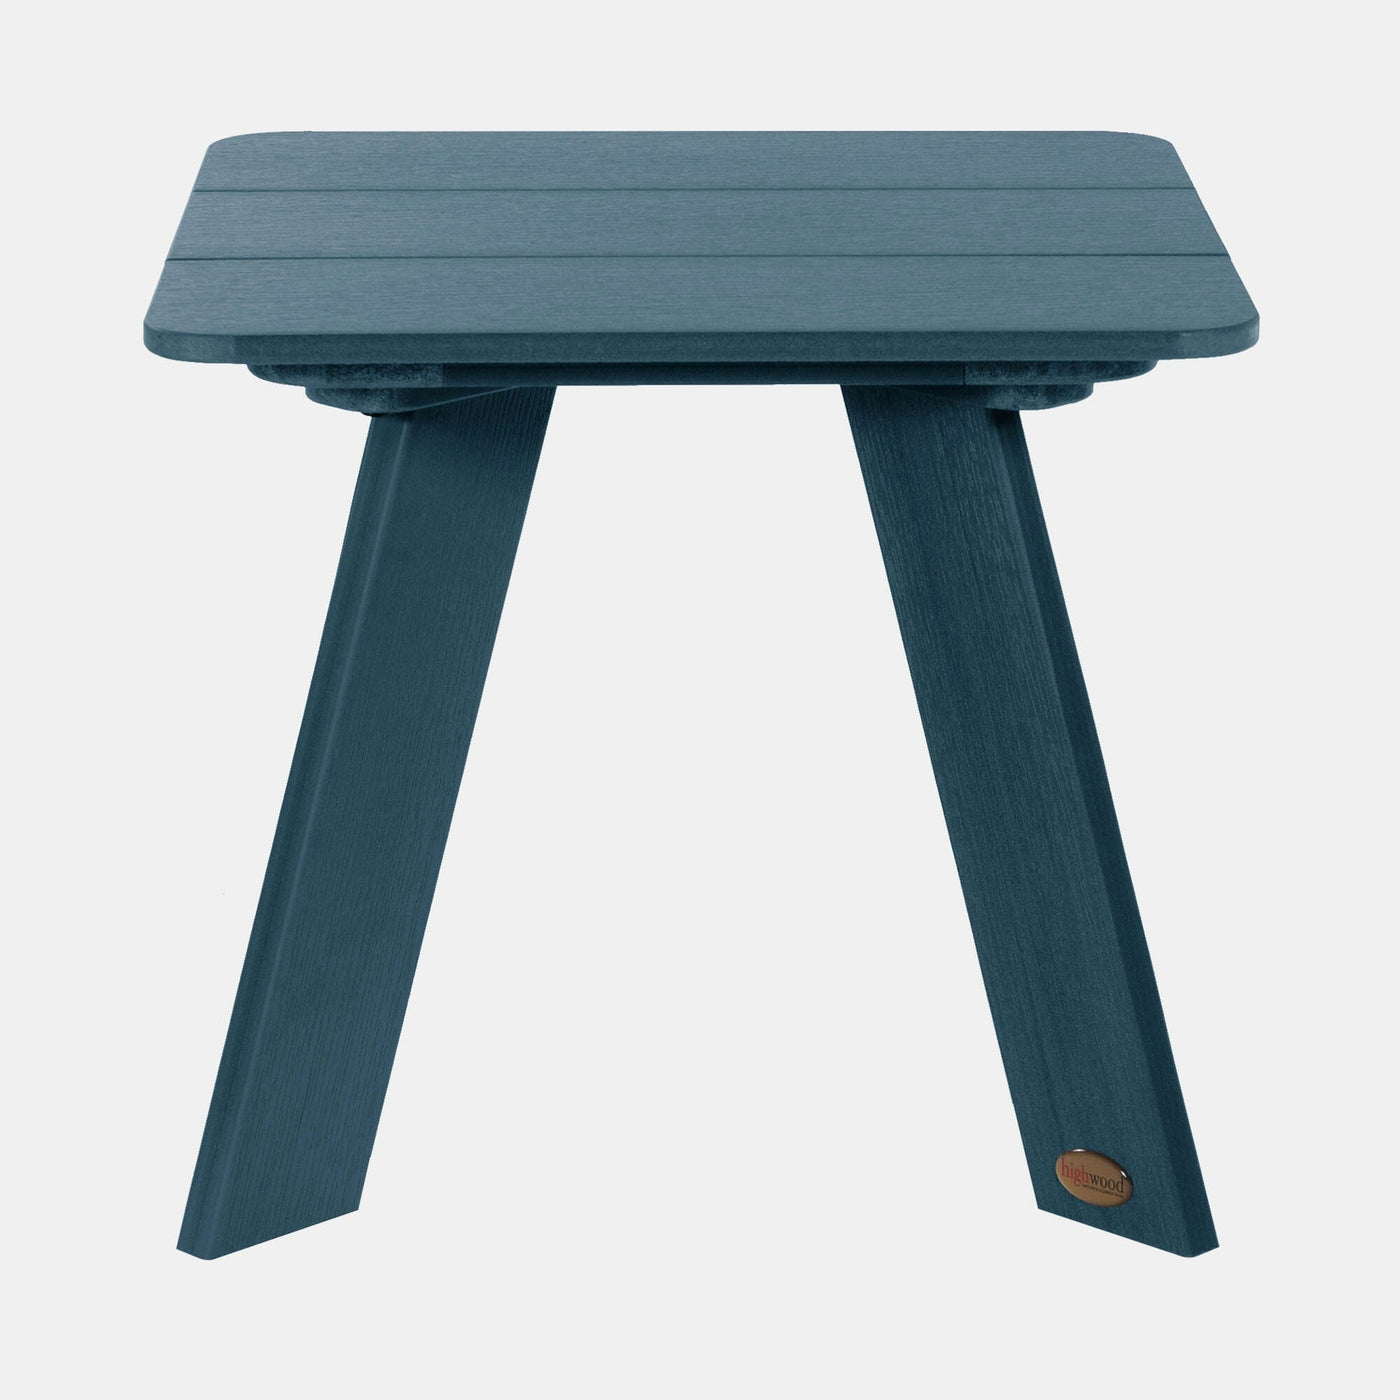 Italica Modern Side Table Table Highwood USA 